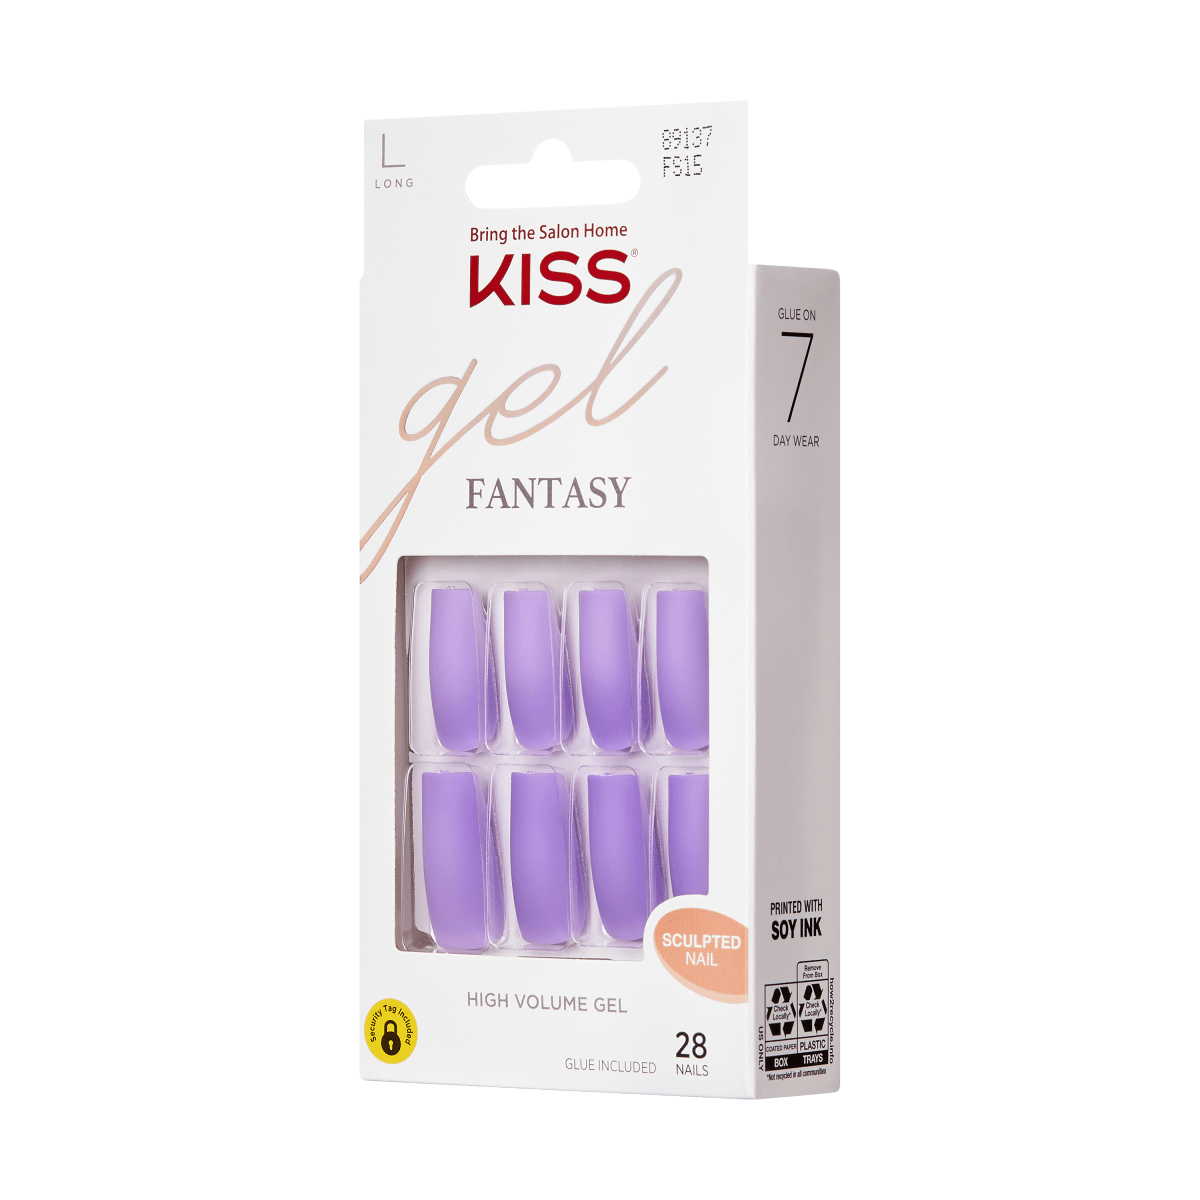 KISS Gel Fantasy Sculpted Nails - Save